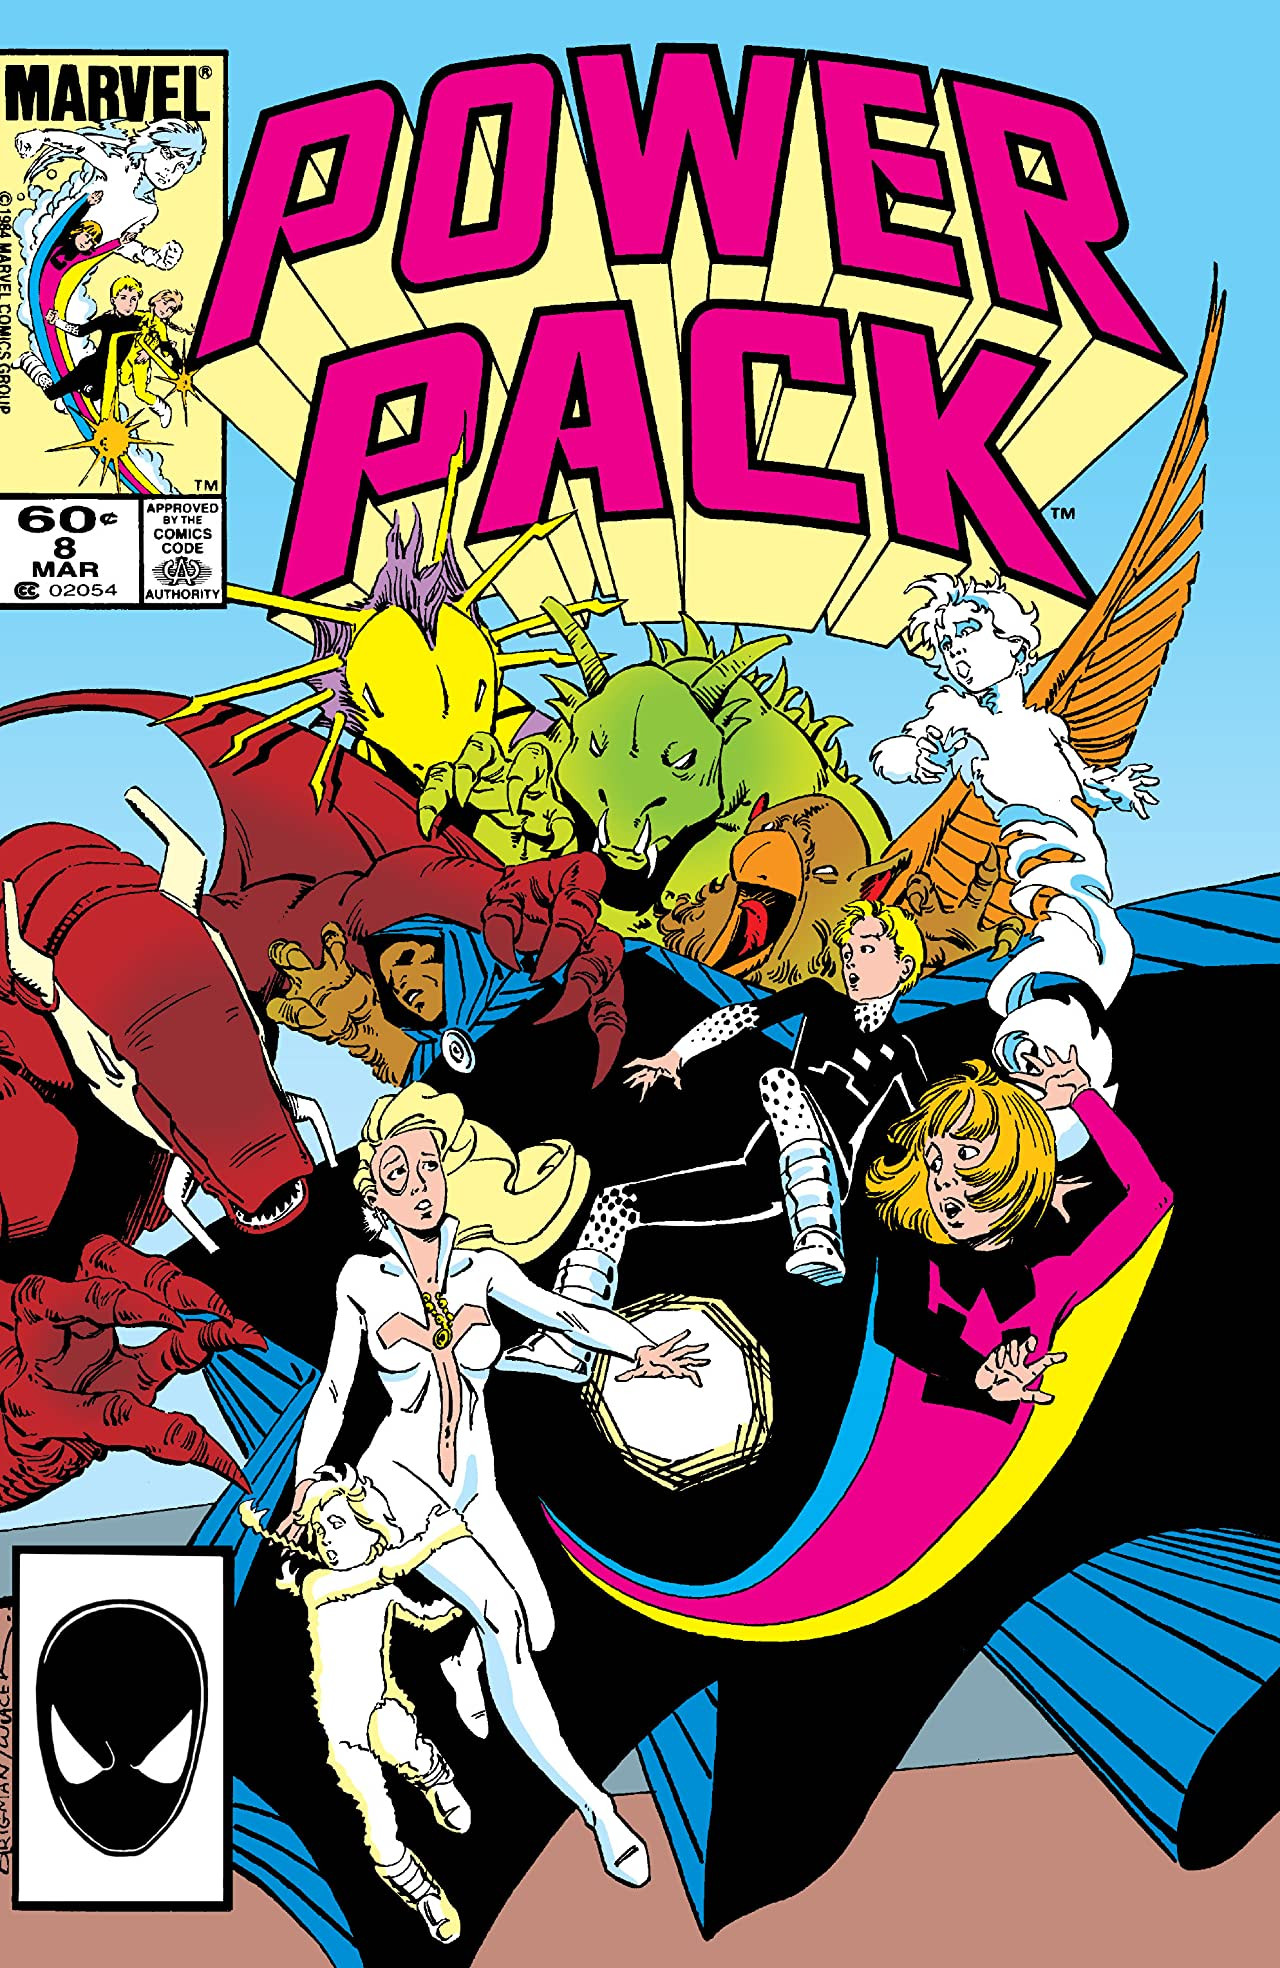 POWERPACK Марвел. Power Pack комикс. A Power Packing комикс. Power Pack Marvel. Power packing комиксы